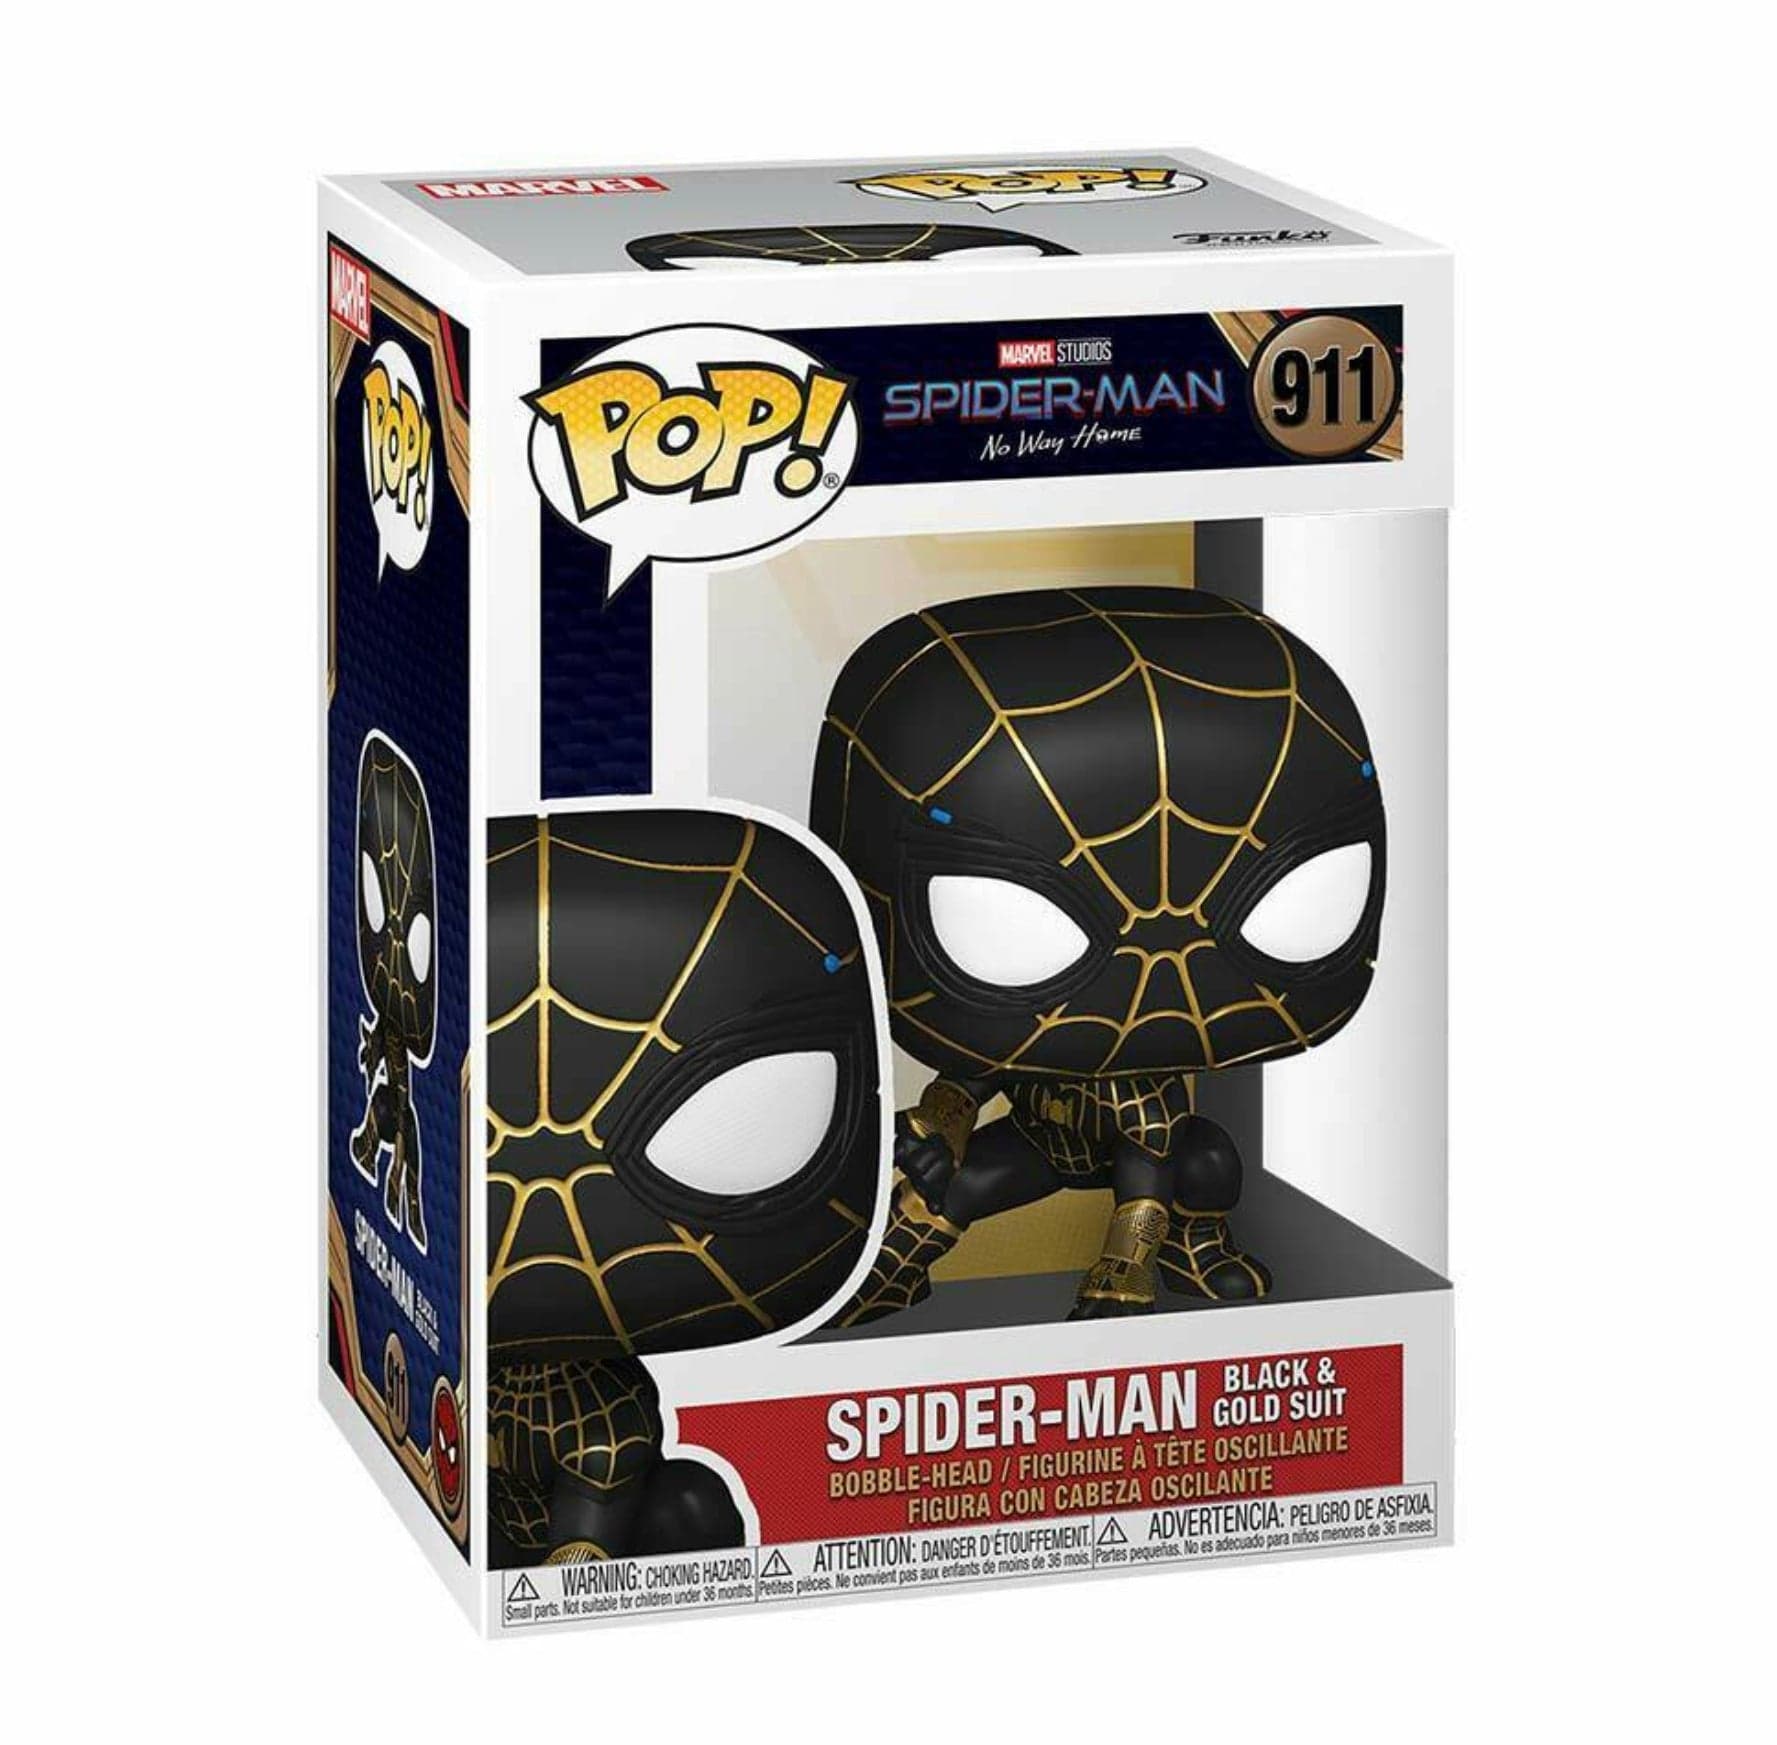 Spider-Man No Way Home Black & Gold Suit Marvel Funko Pop Figure